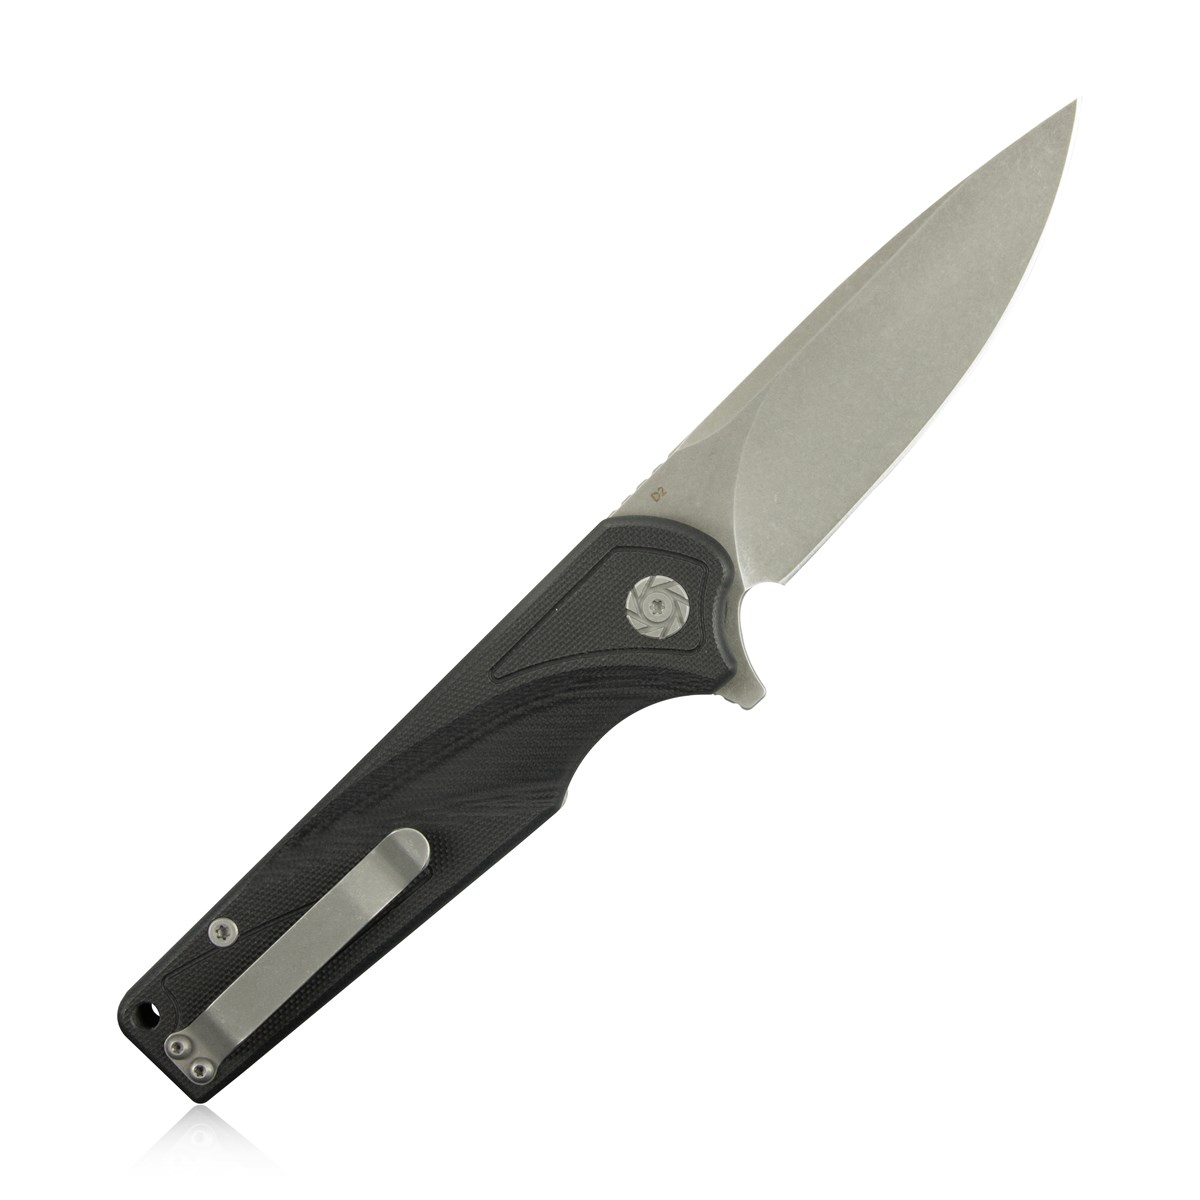 Kubey D2 Steel Folding Knife G10 Handle Liner Lock Ceramica Ball Bearing Outdoor Survival Hiking Knife KU233